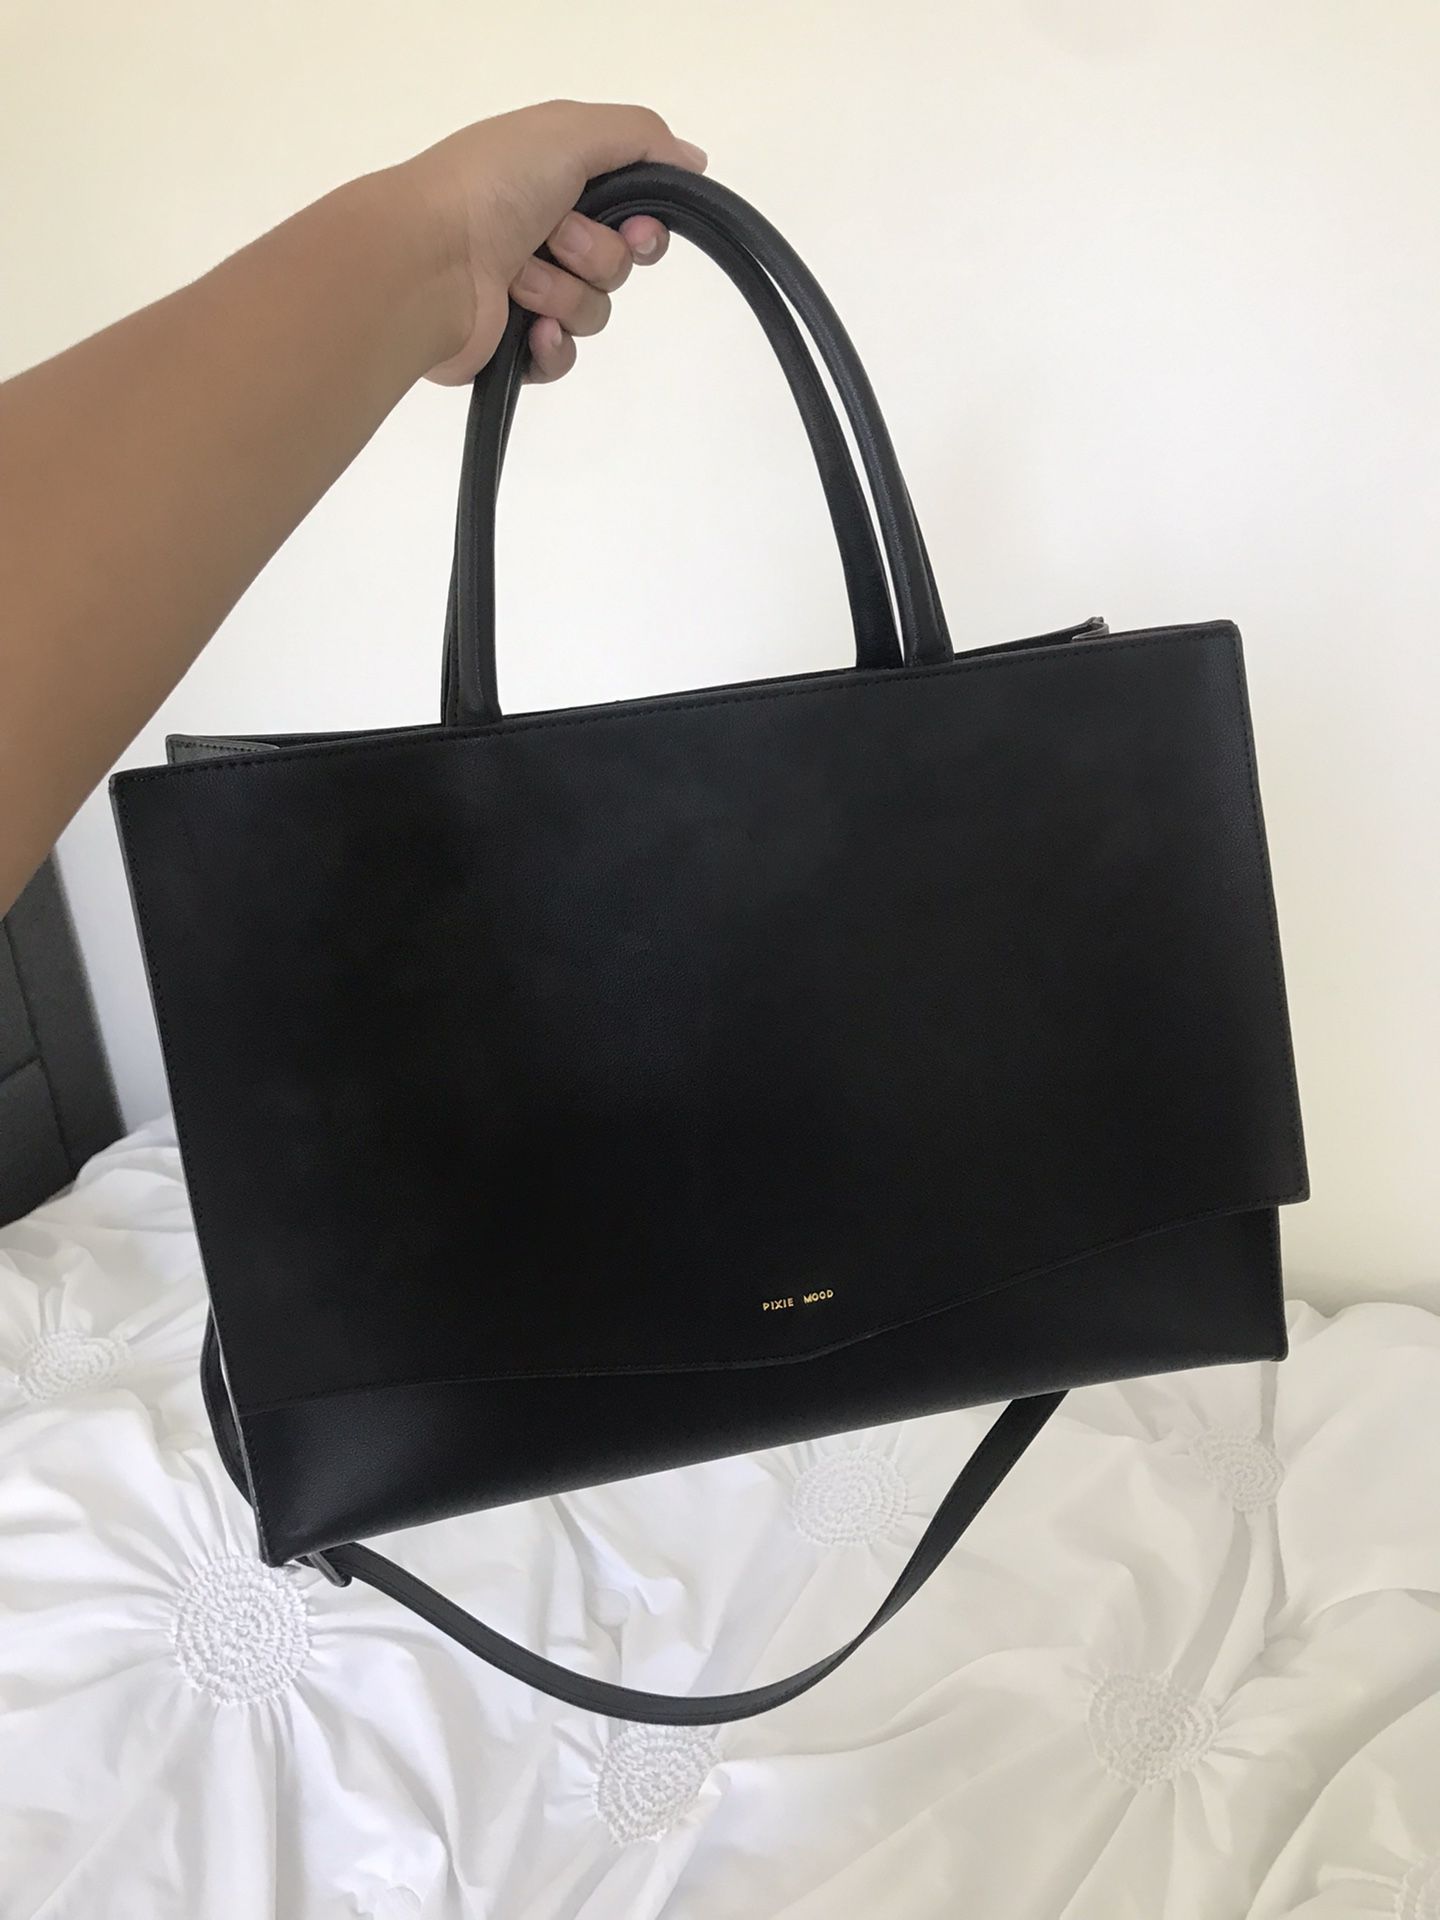 Black Pixie Mood Caitlin 15.5 x 11.5 Vegan Leather Large Tote Bag